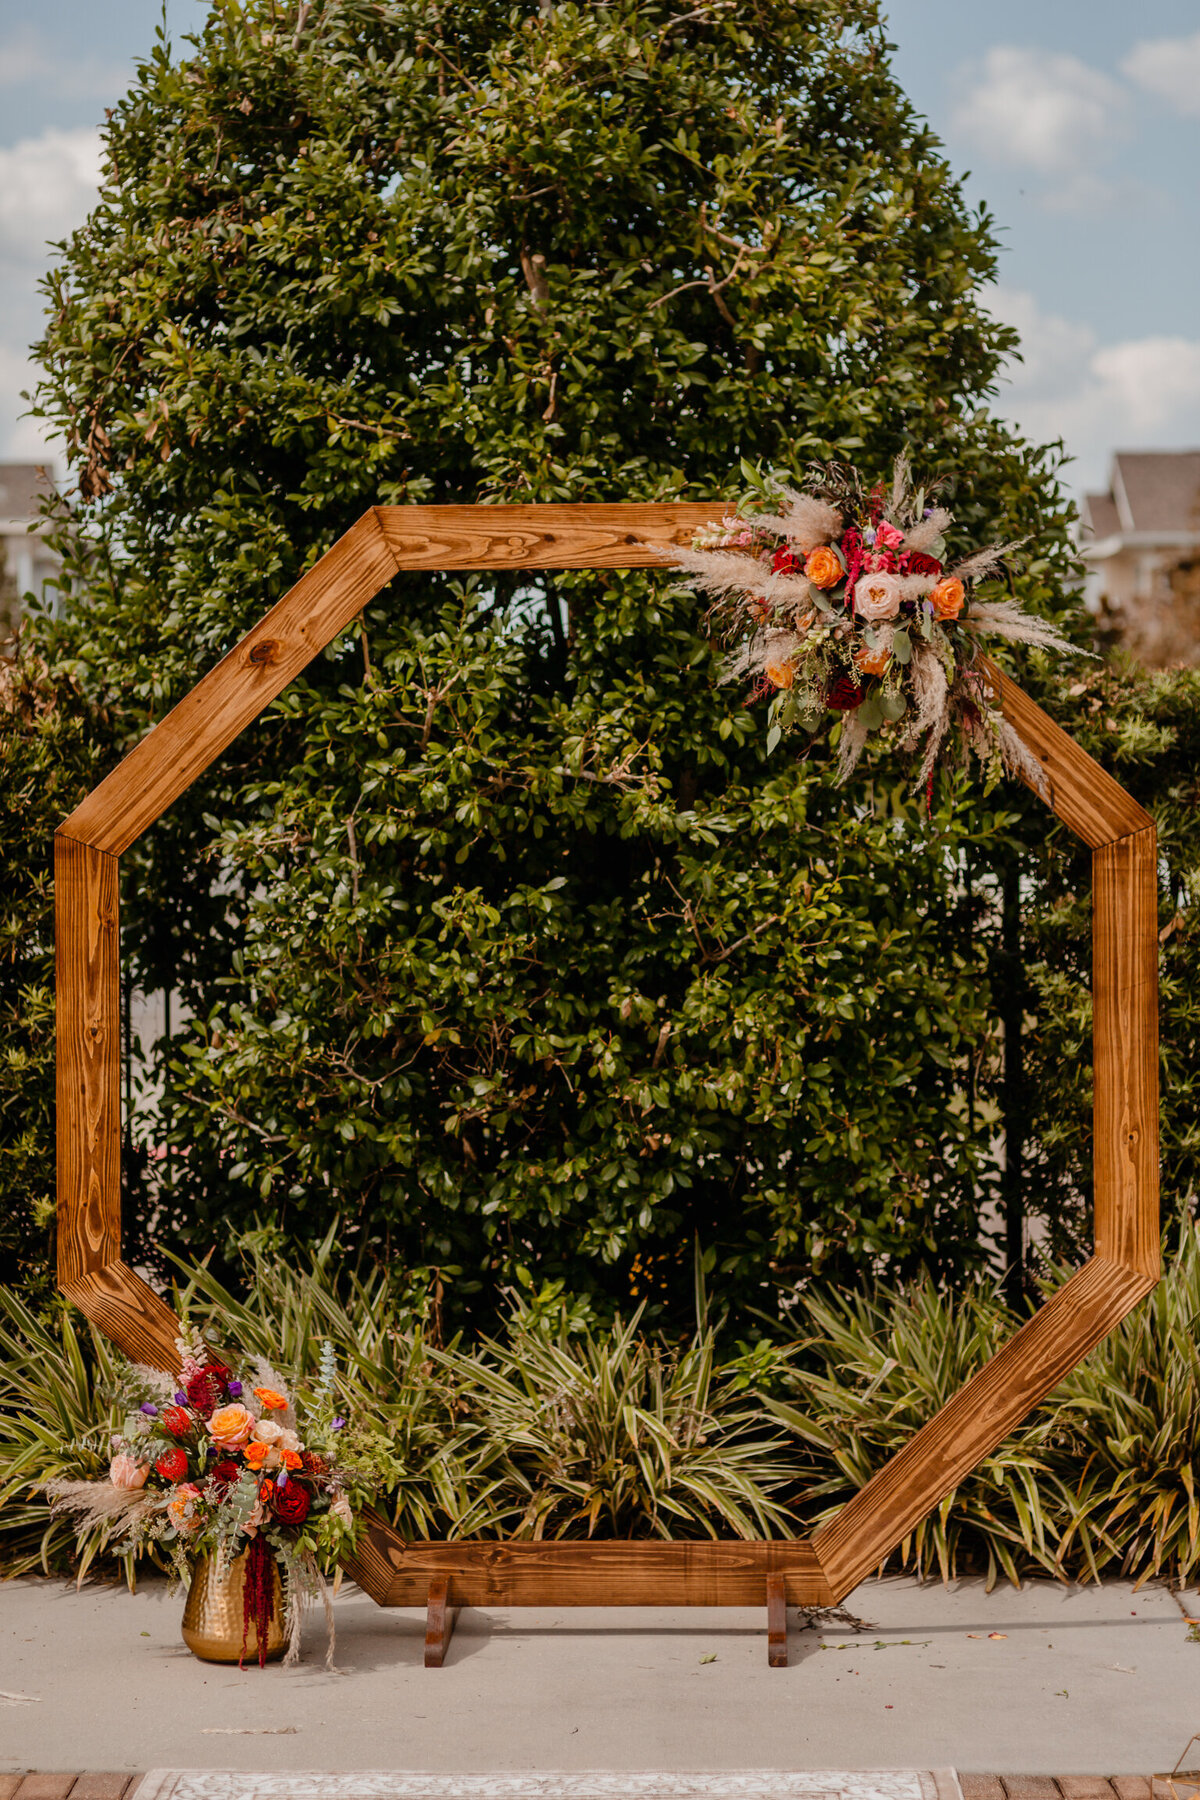 alt="flowers on wooden arch outside wedding"